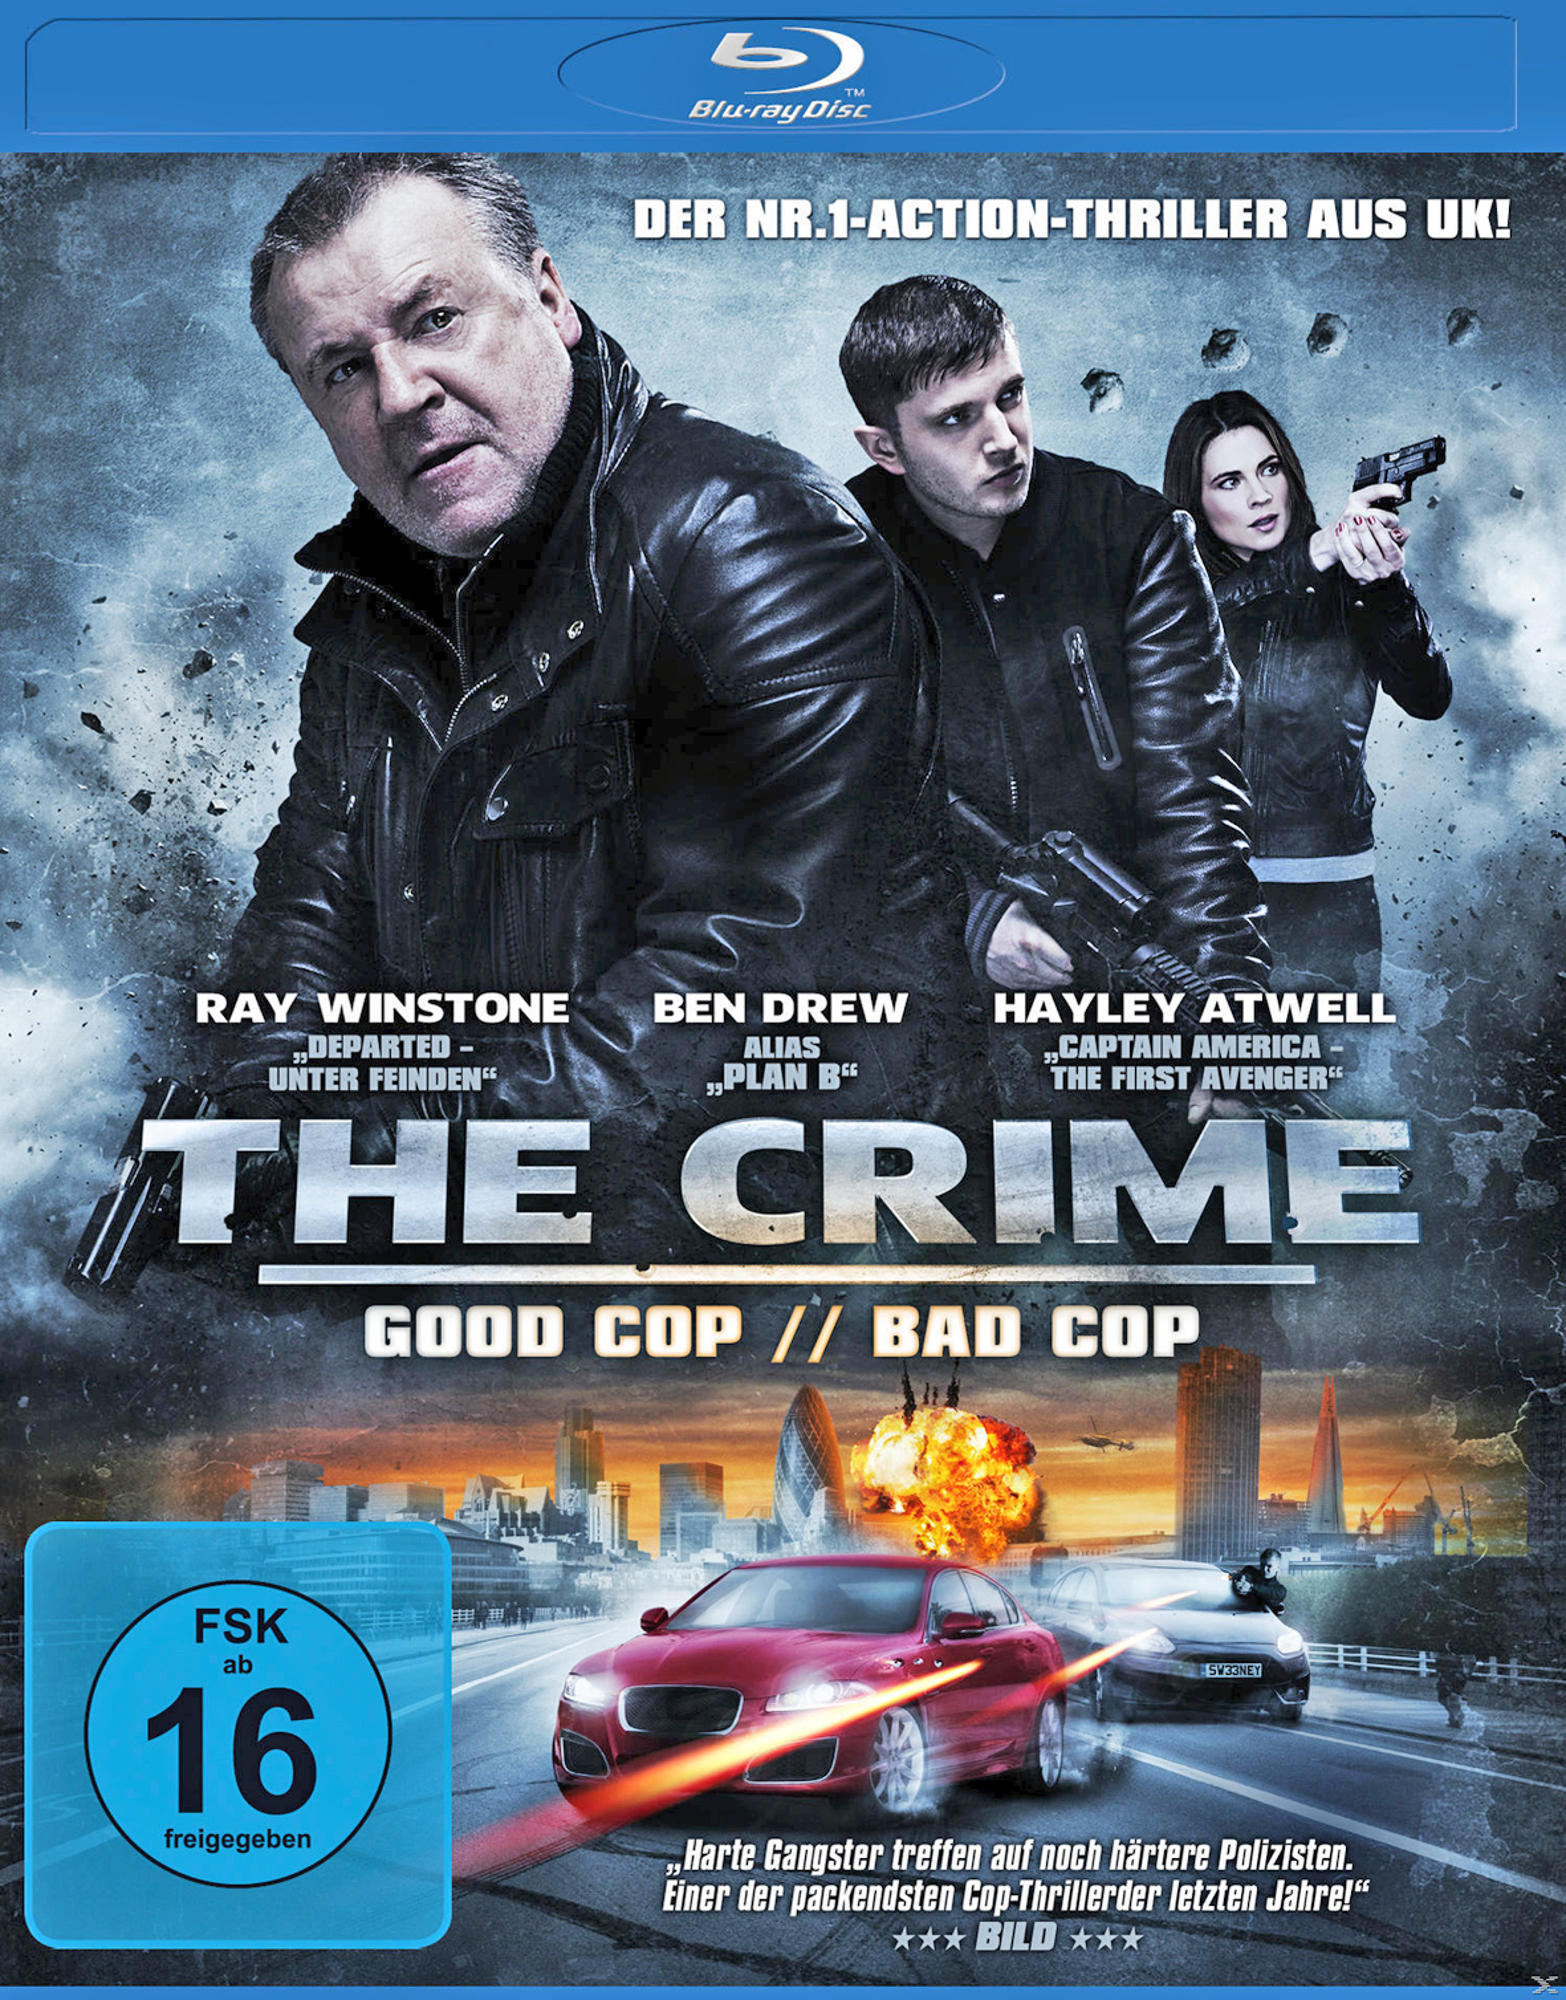 The Good Blu-ray // Cop Crime Cop – Bad